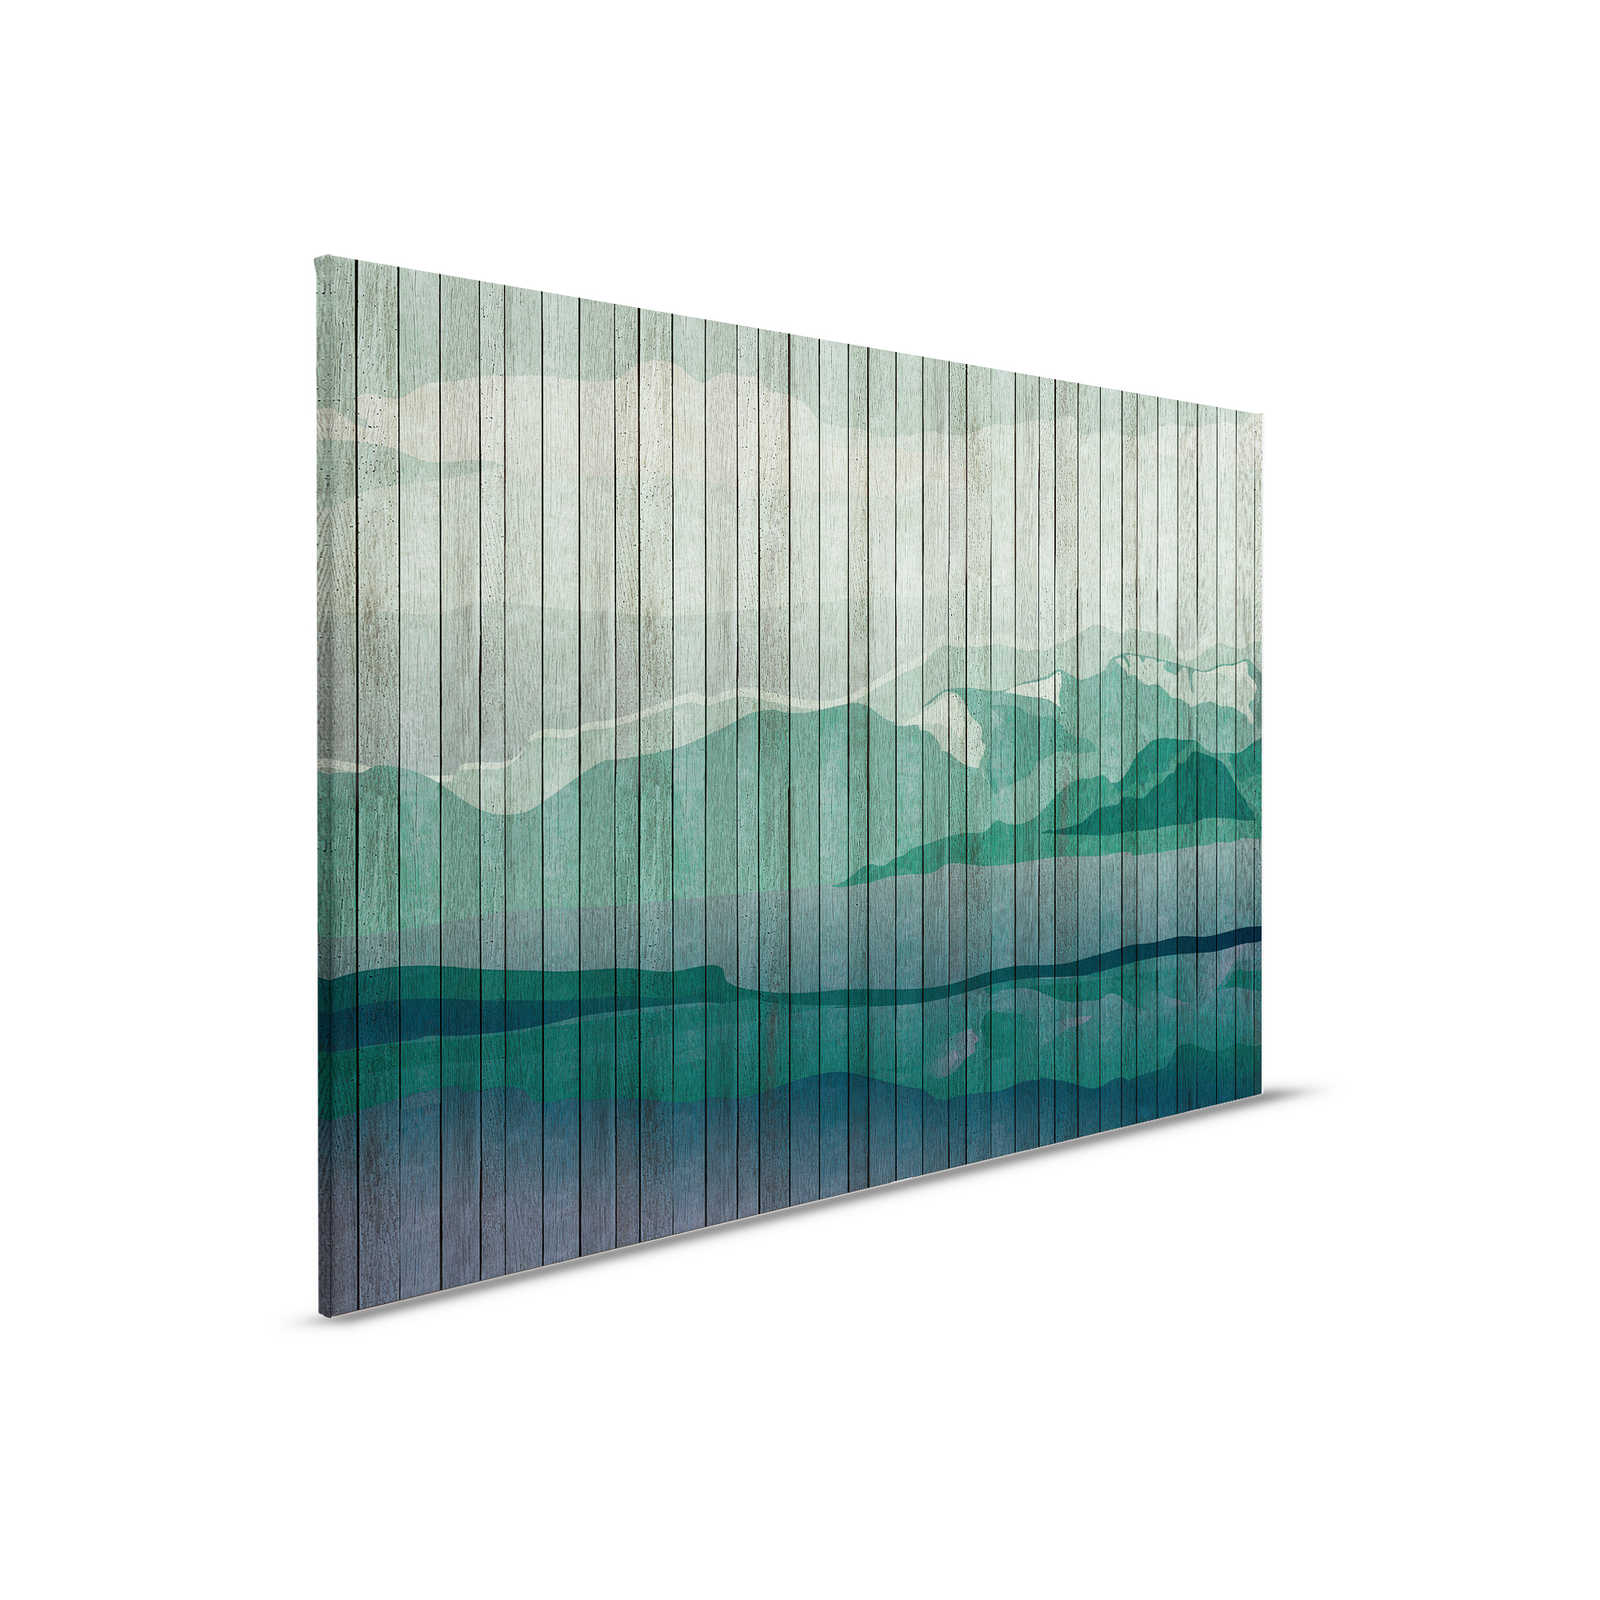 Mountains 3 - modern canvas picture mountain landscape & board optics - 0,90 m x 0,60 m
